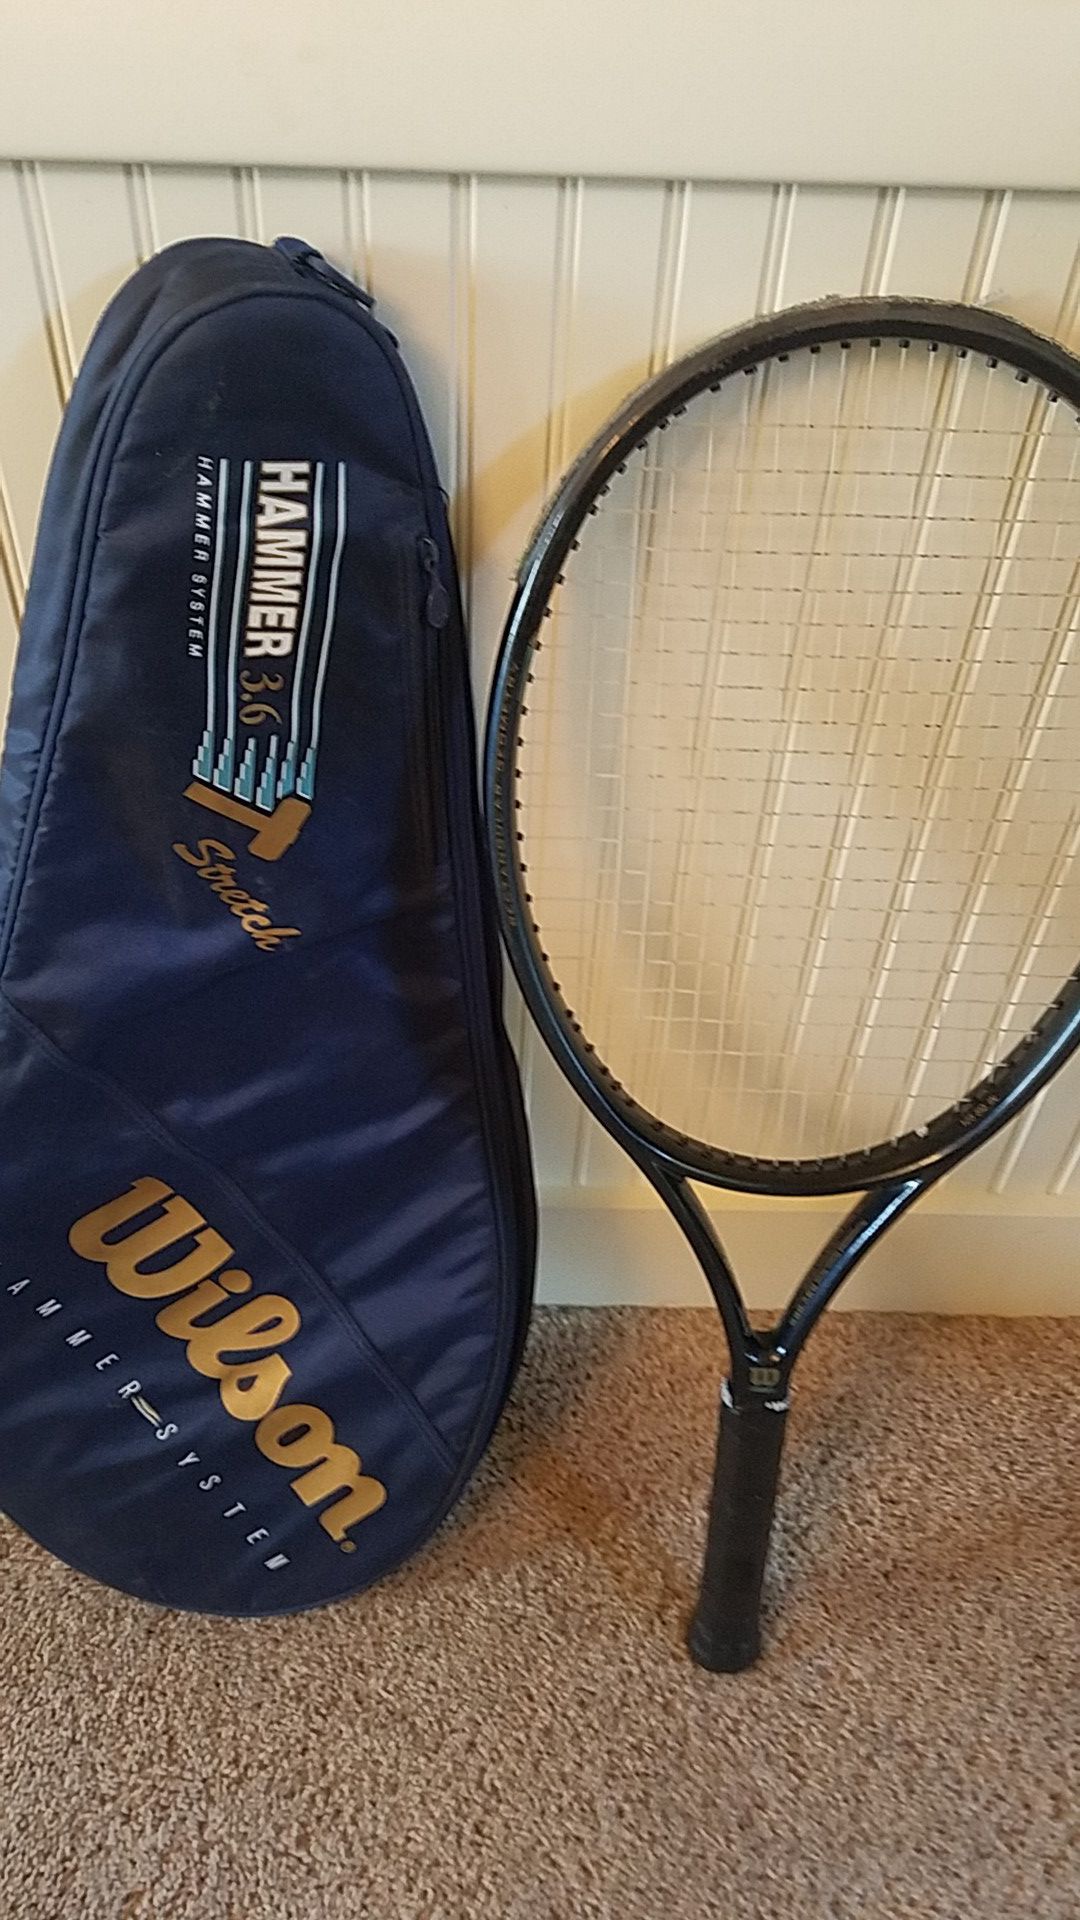 Wilson tennis racket Hammer 3.6.